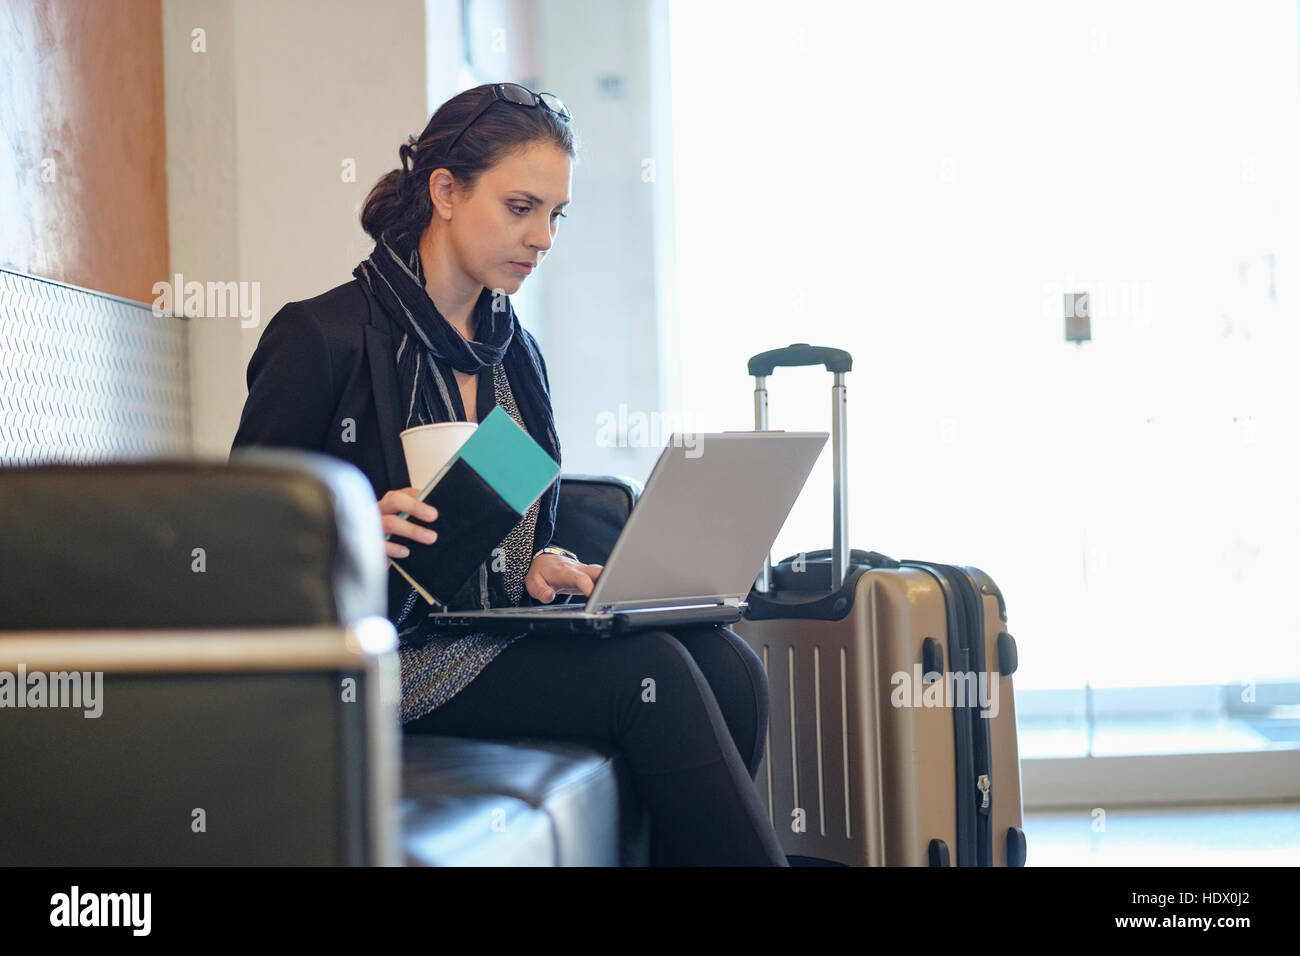 Hispanic woman holding passport using laptop in airport Stock Photo